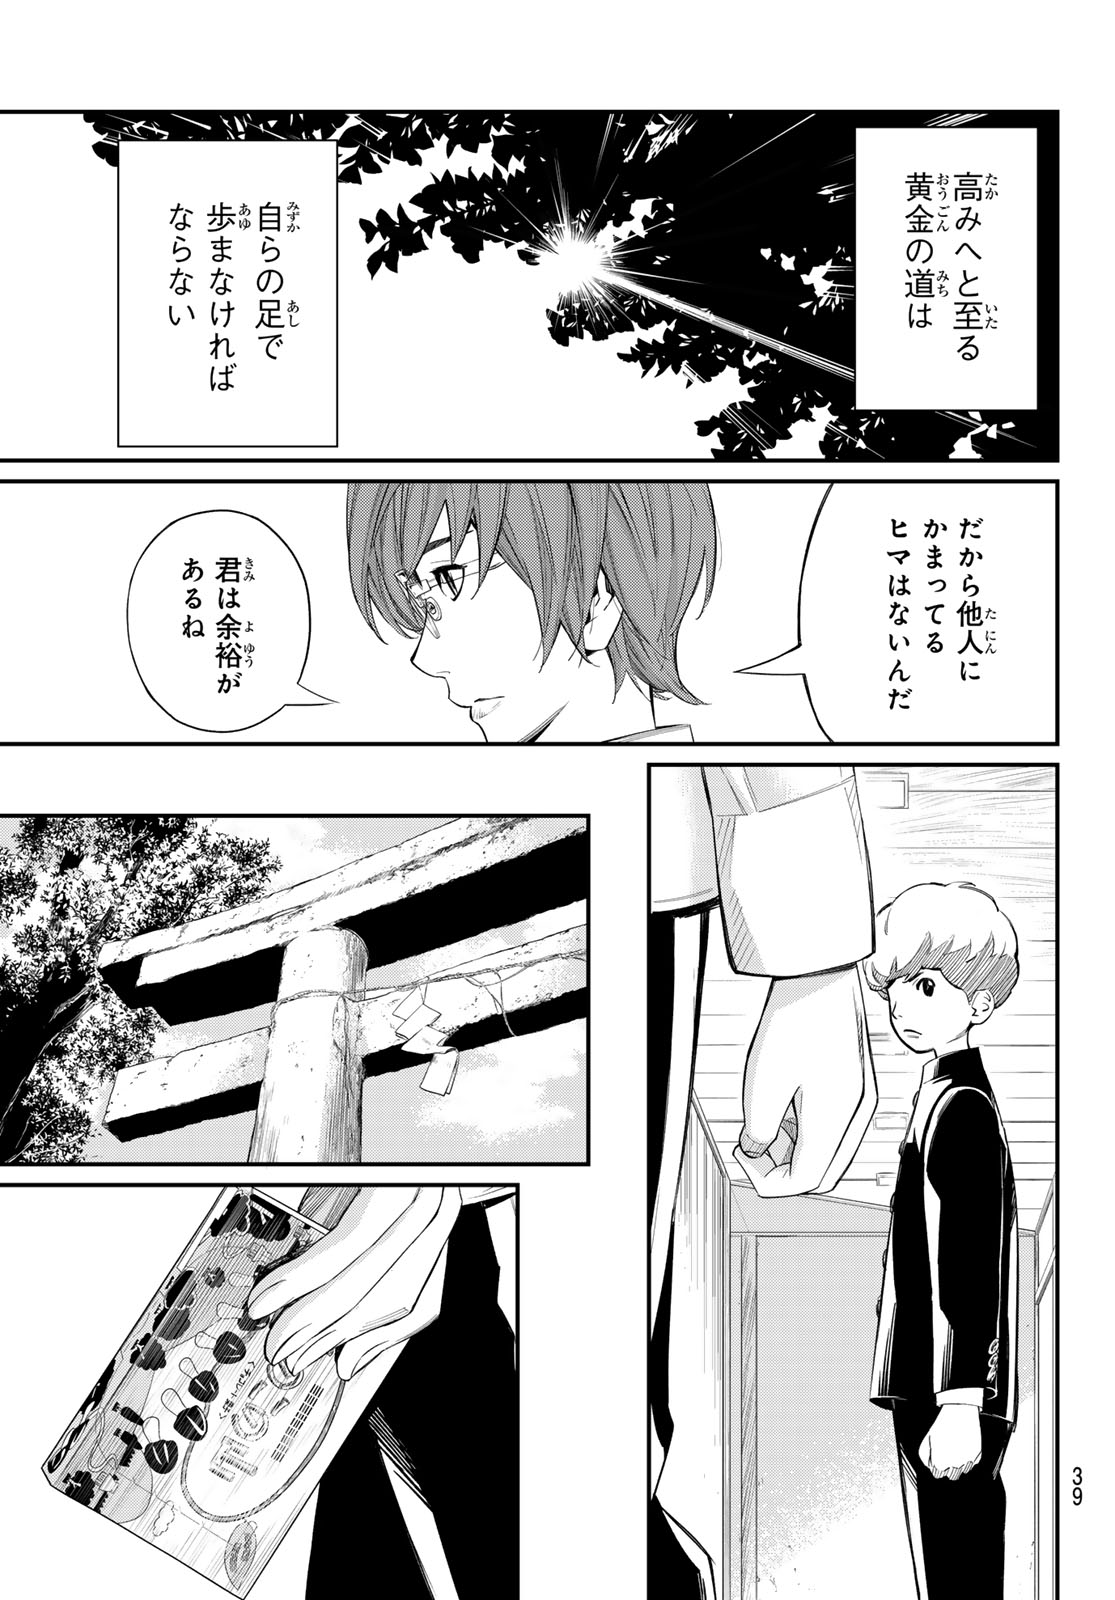 Banjou no Orion - Chapter 23 - Page 7